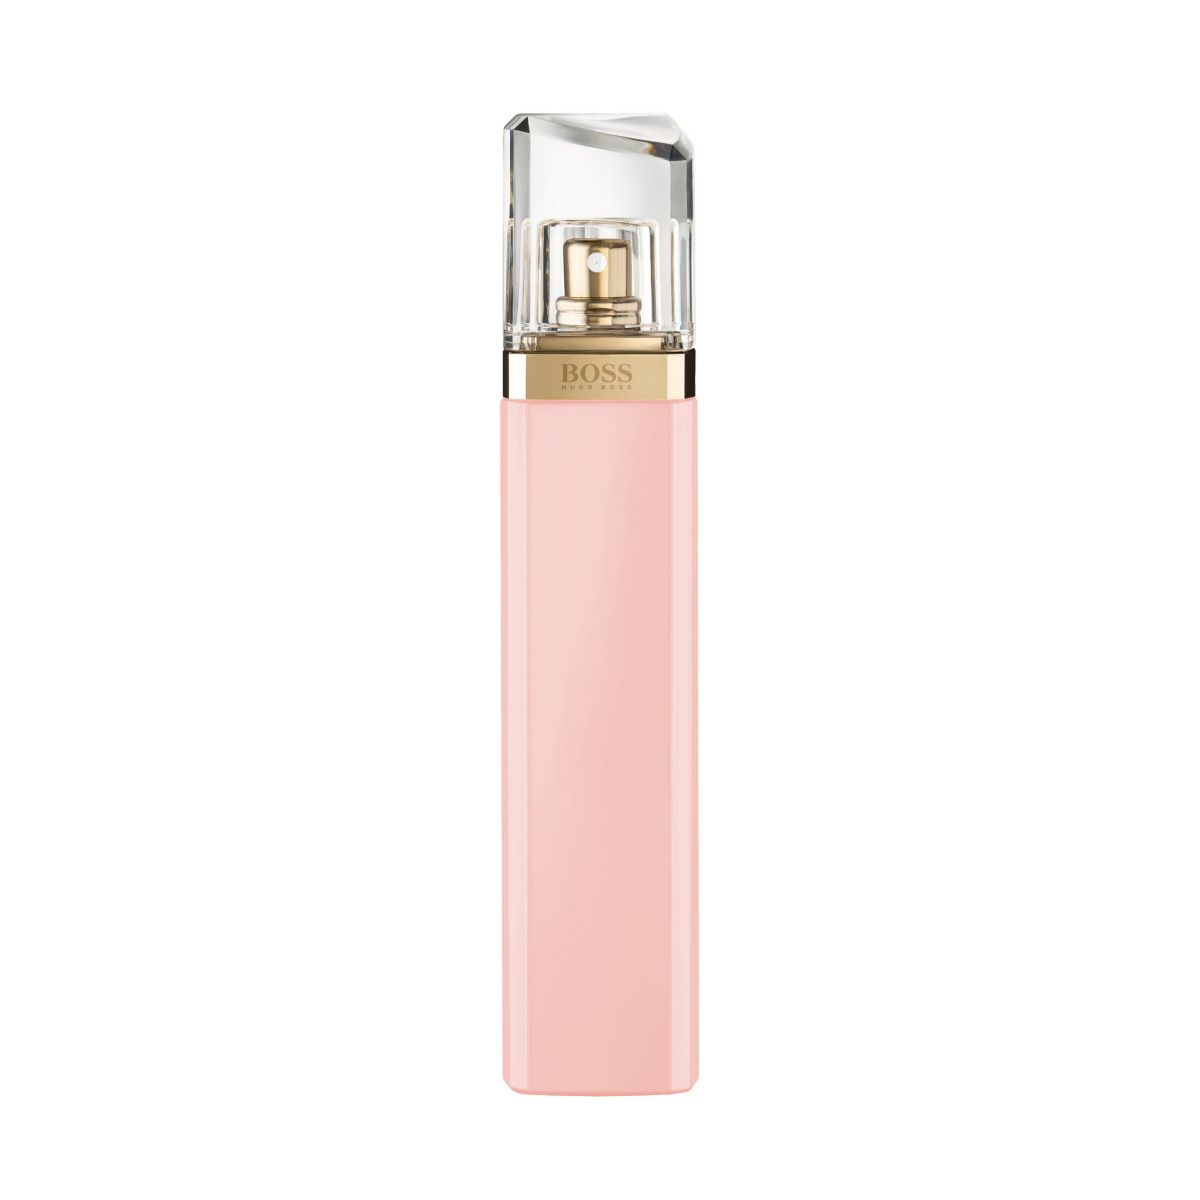 BOSS Ma Vie Pour Femme Eau de Parfum (75 ml) Hugo Boss